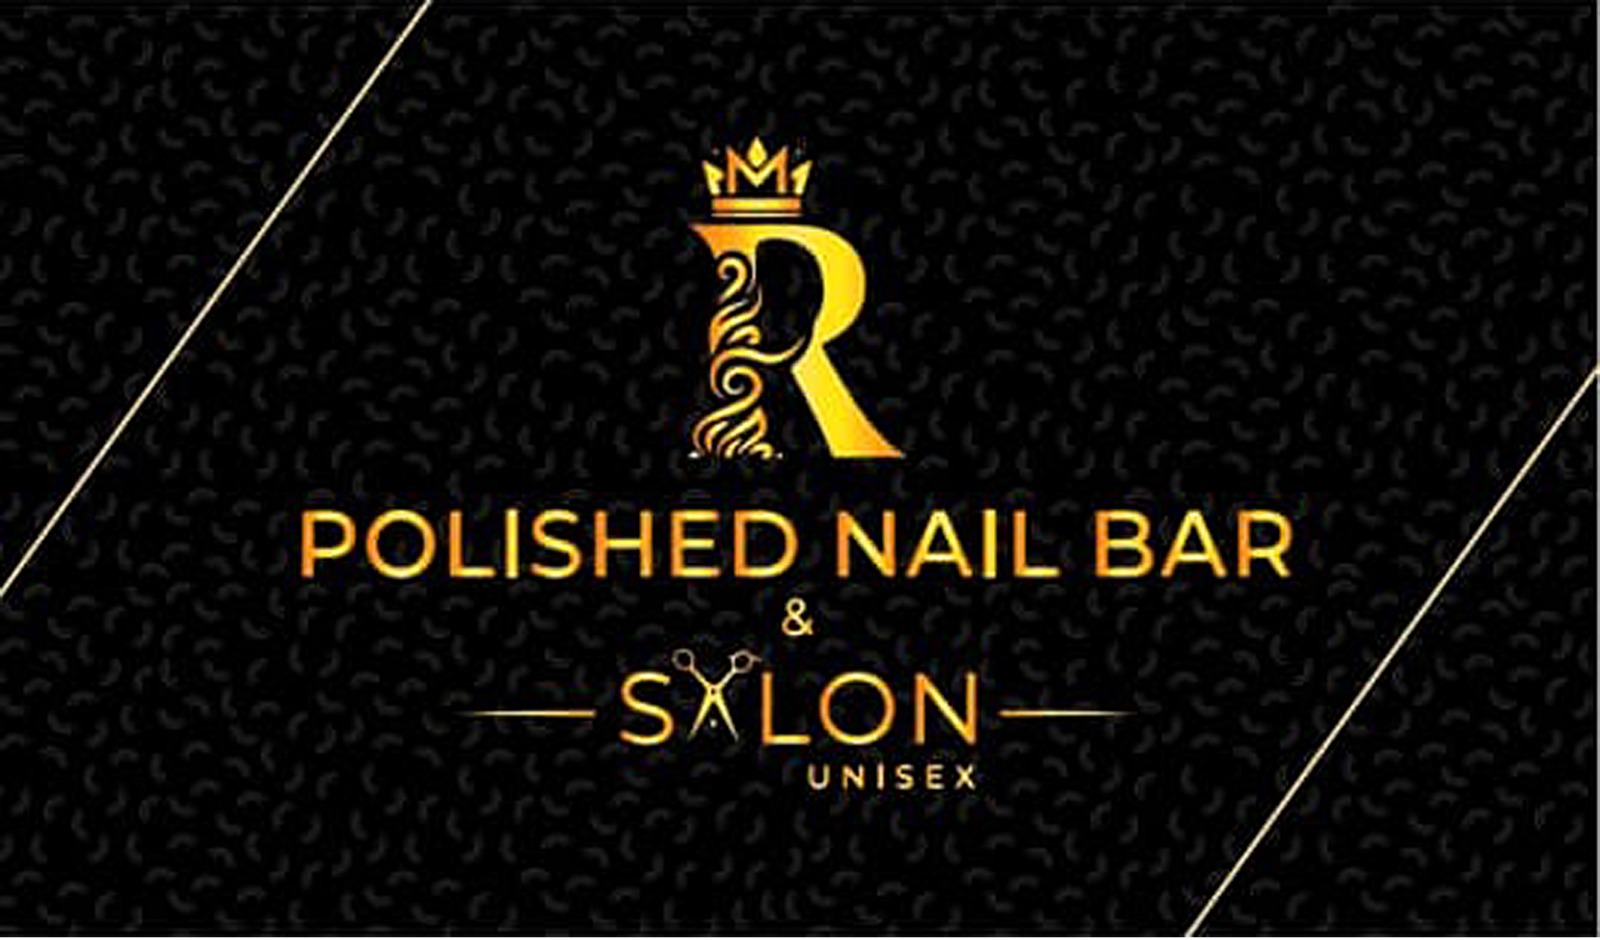 Polished nail bar & salon unisex